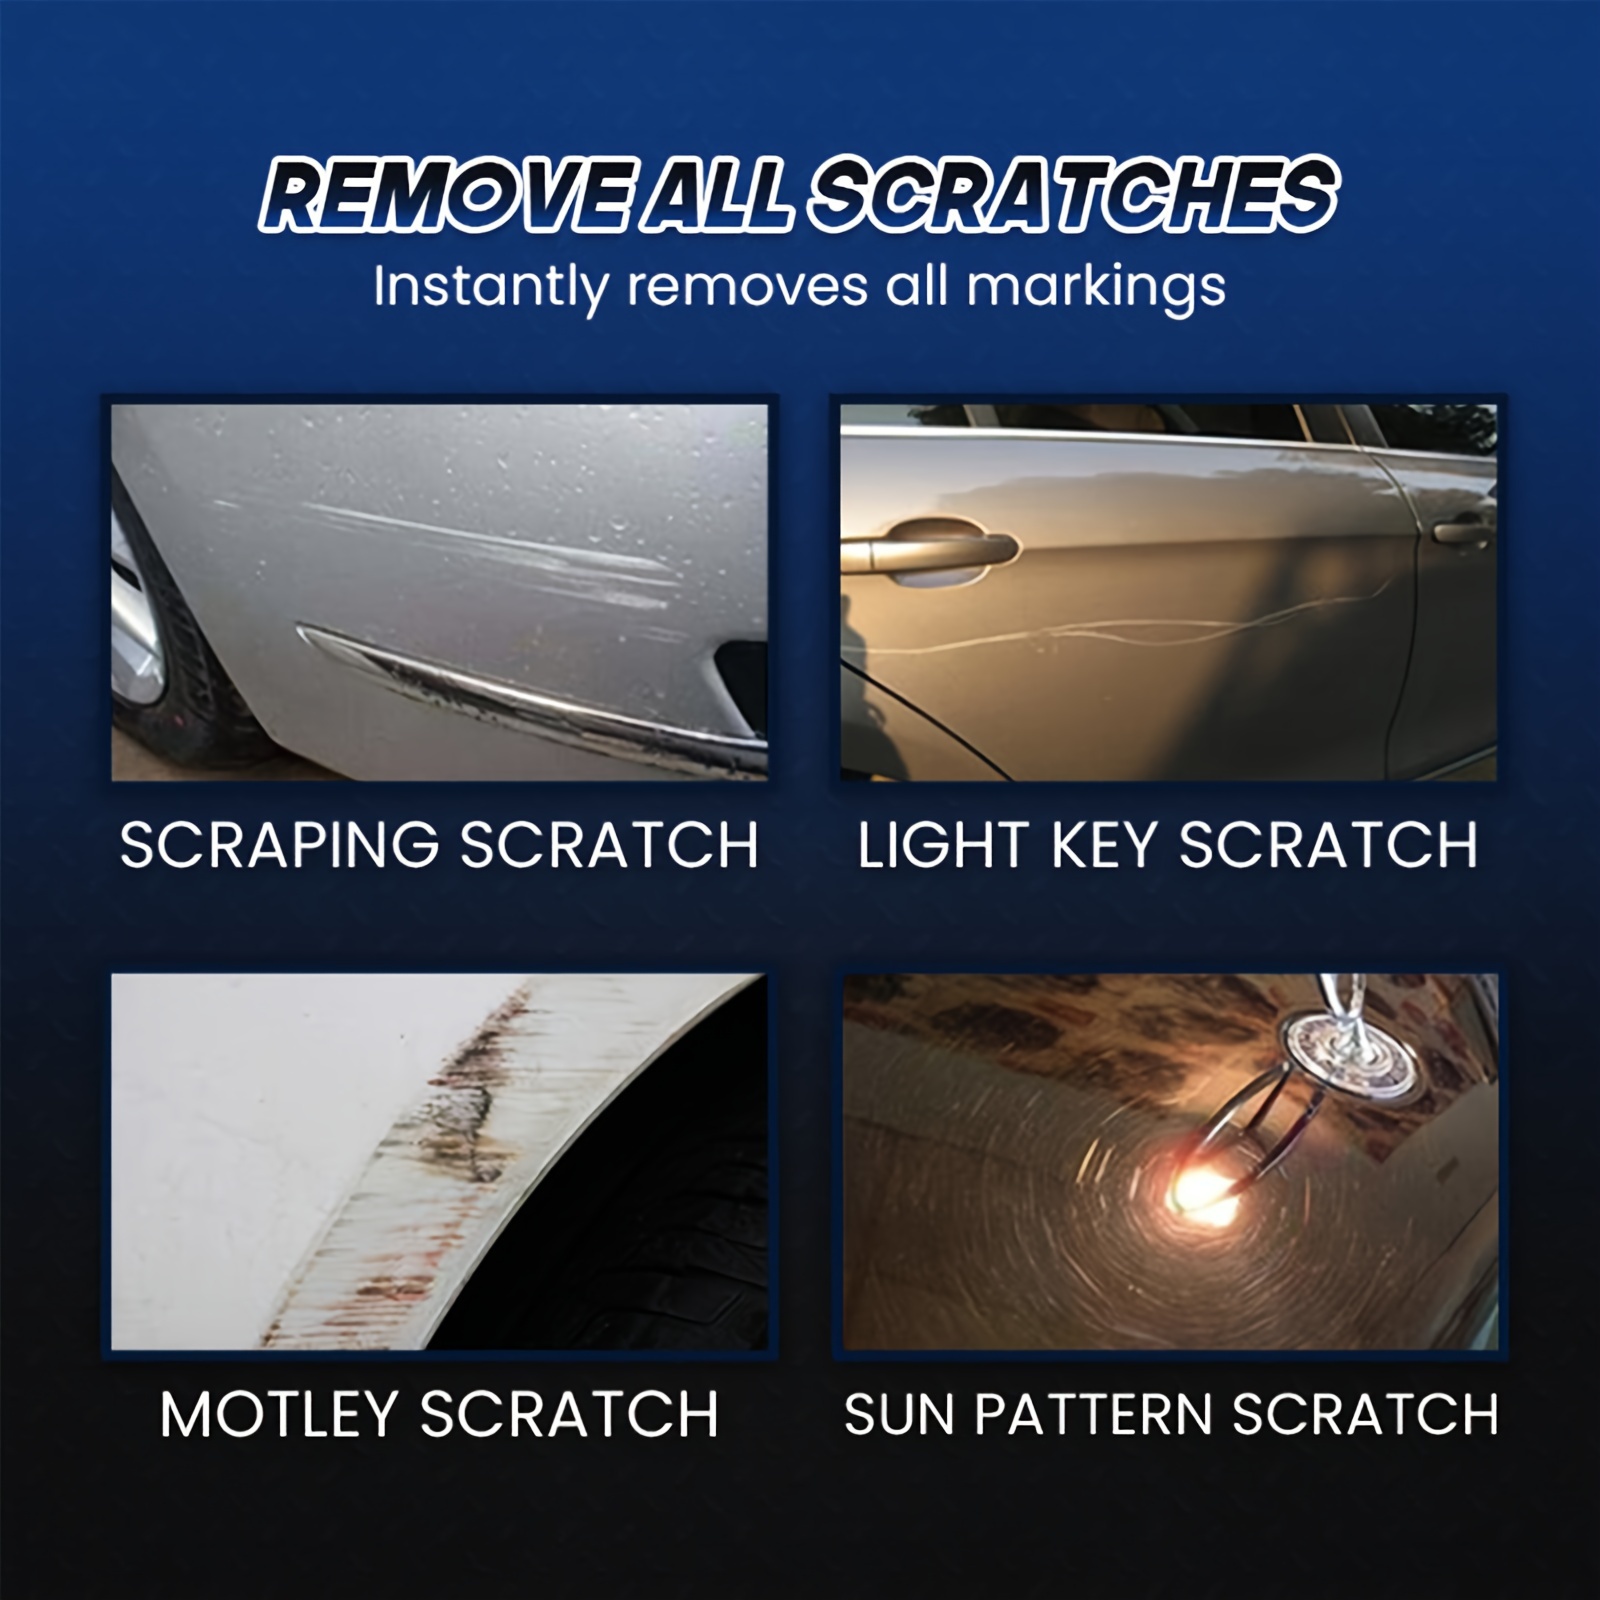 Car Nano Repair Spray Paint Scratch Repair Clean - Temu